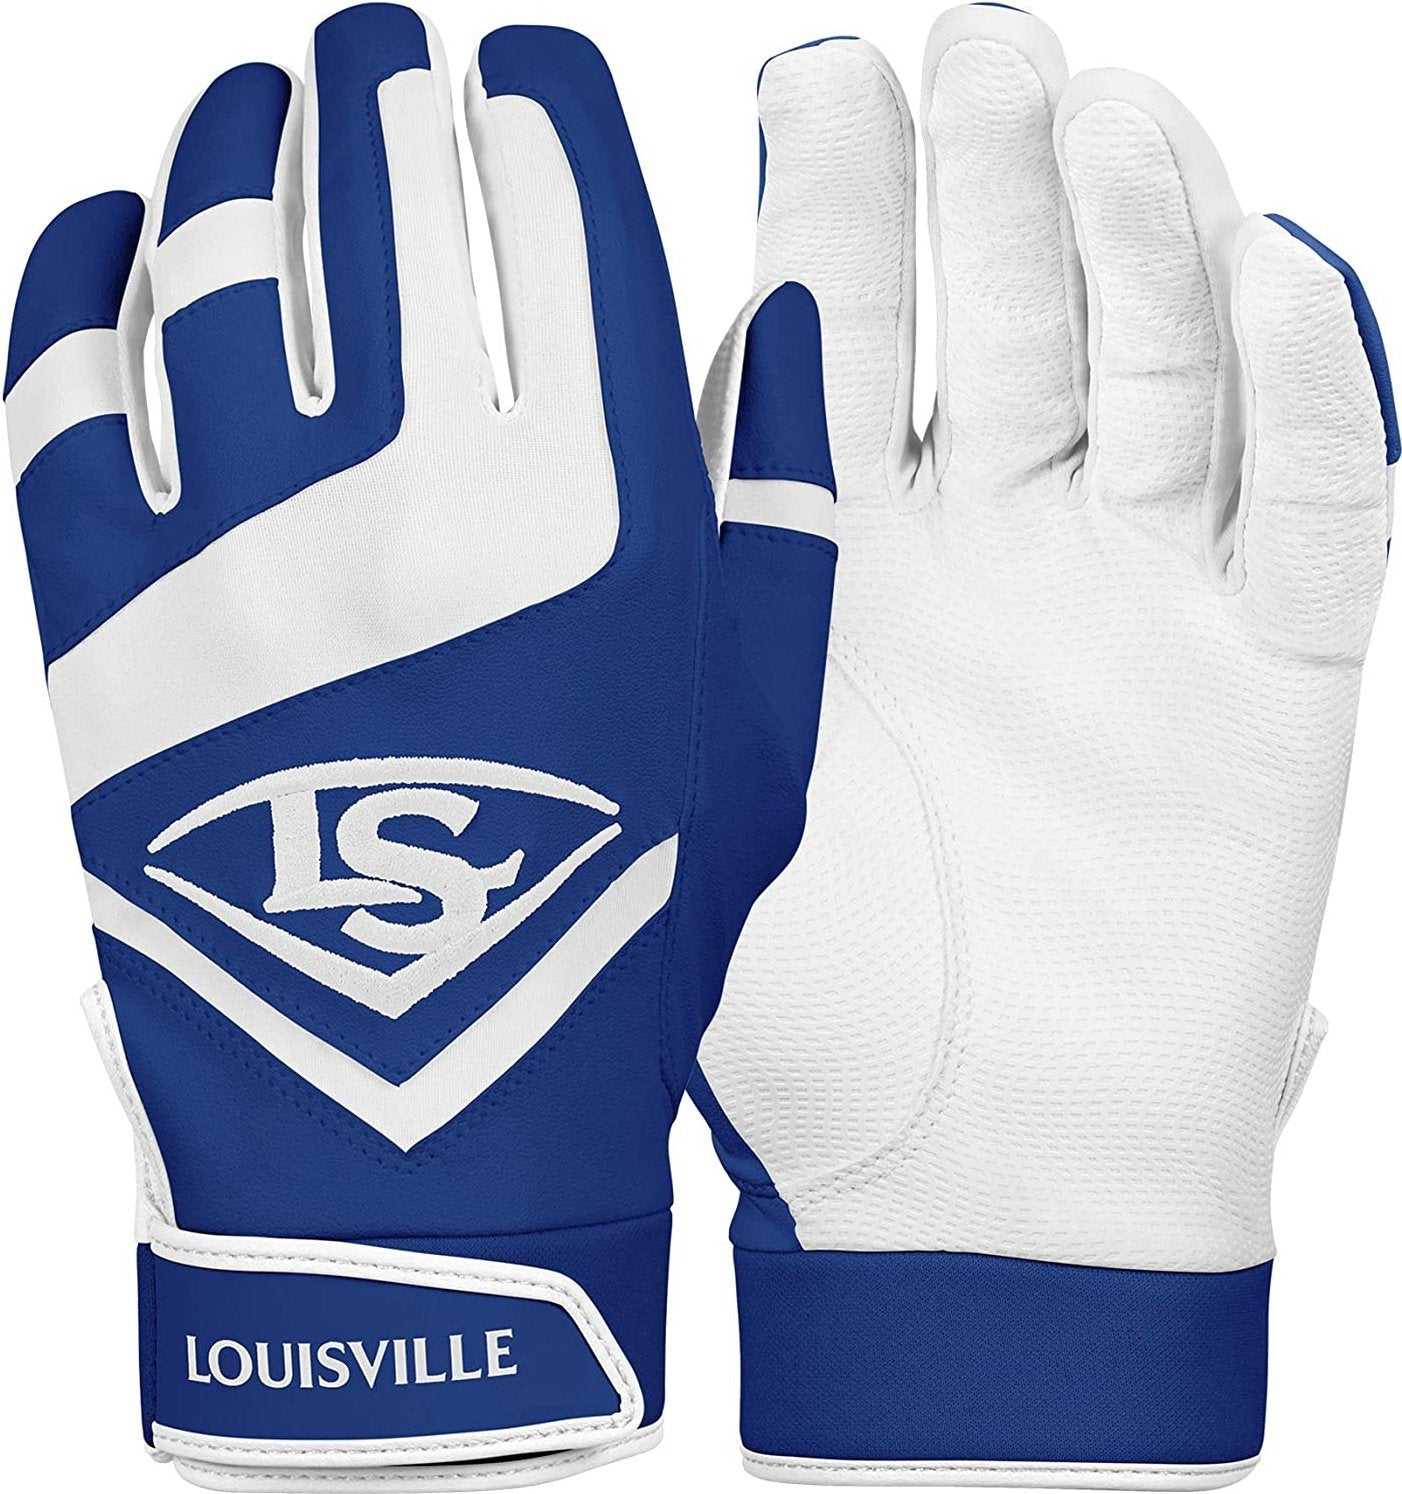 Louisville Slugger Genuine Batting Gloves - Royal - HIT A Double